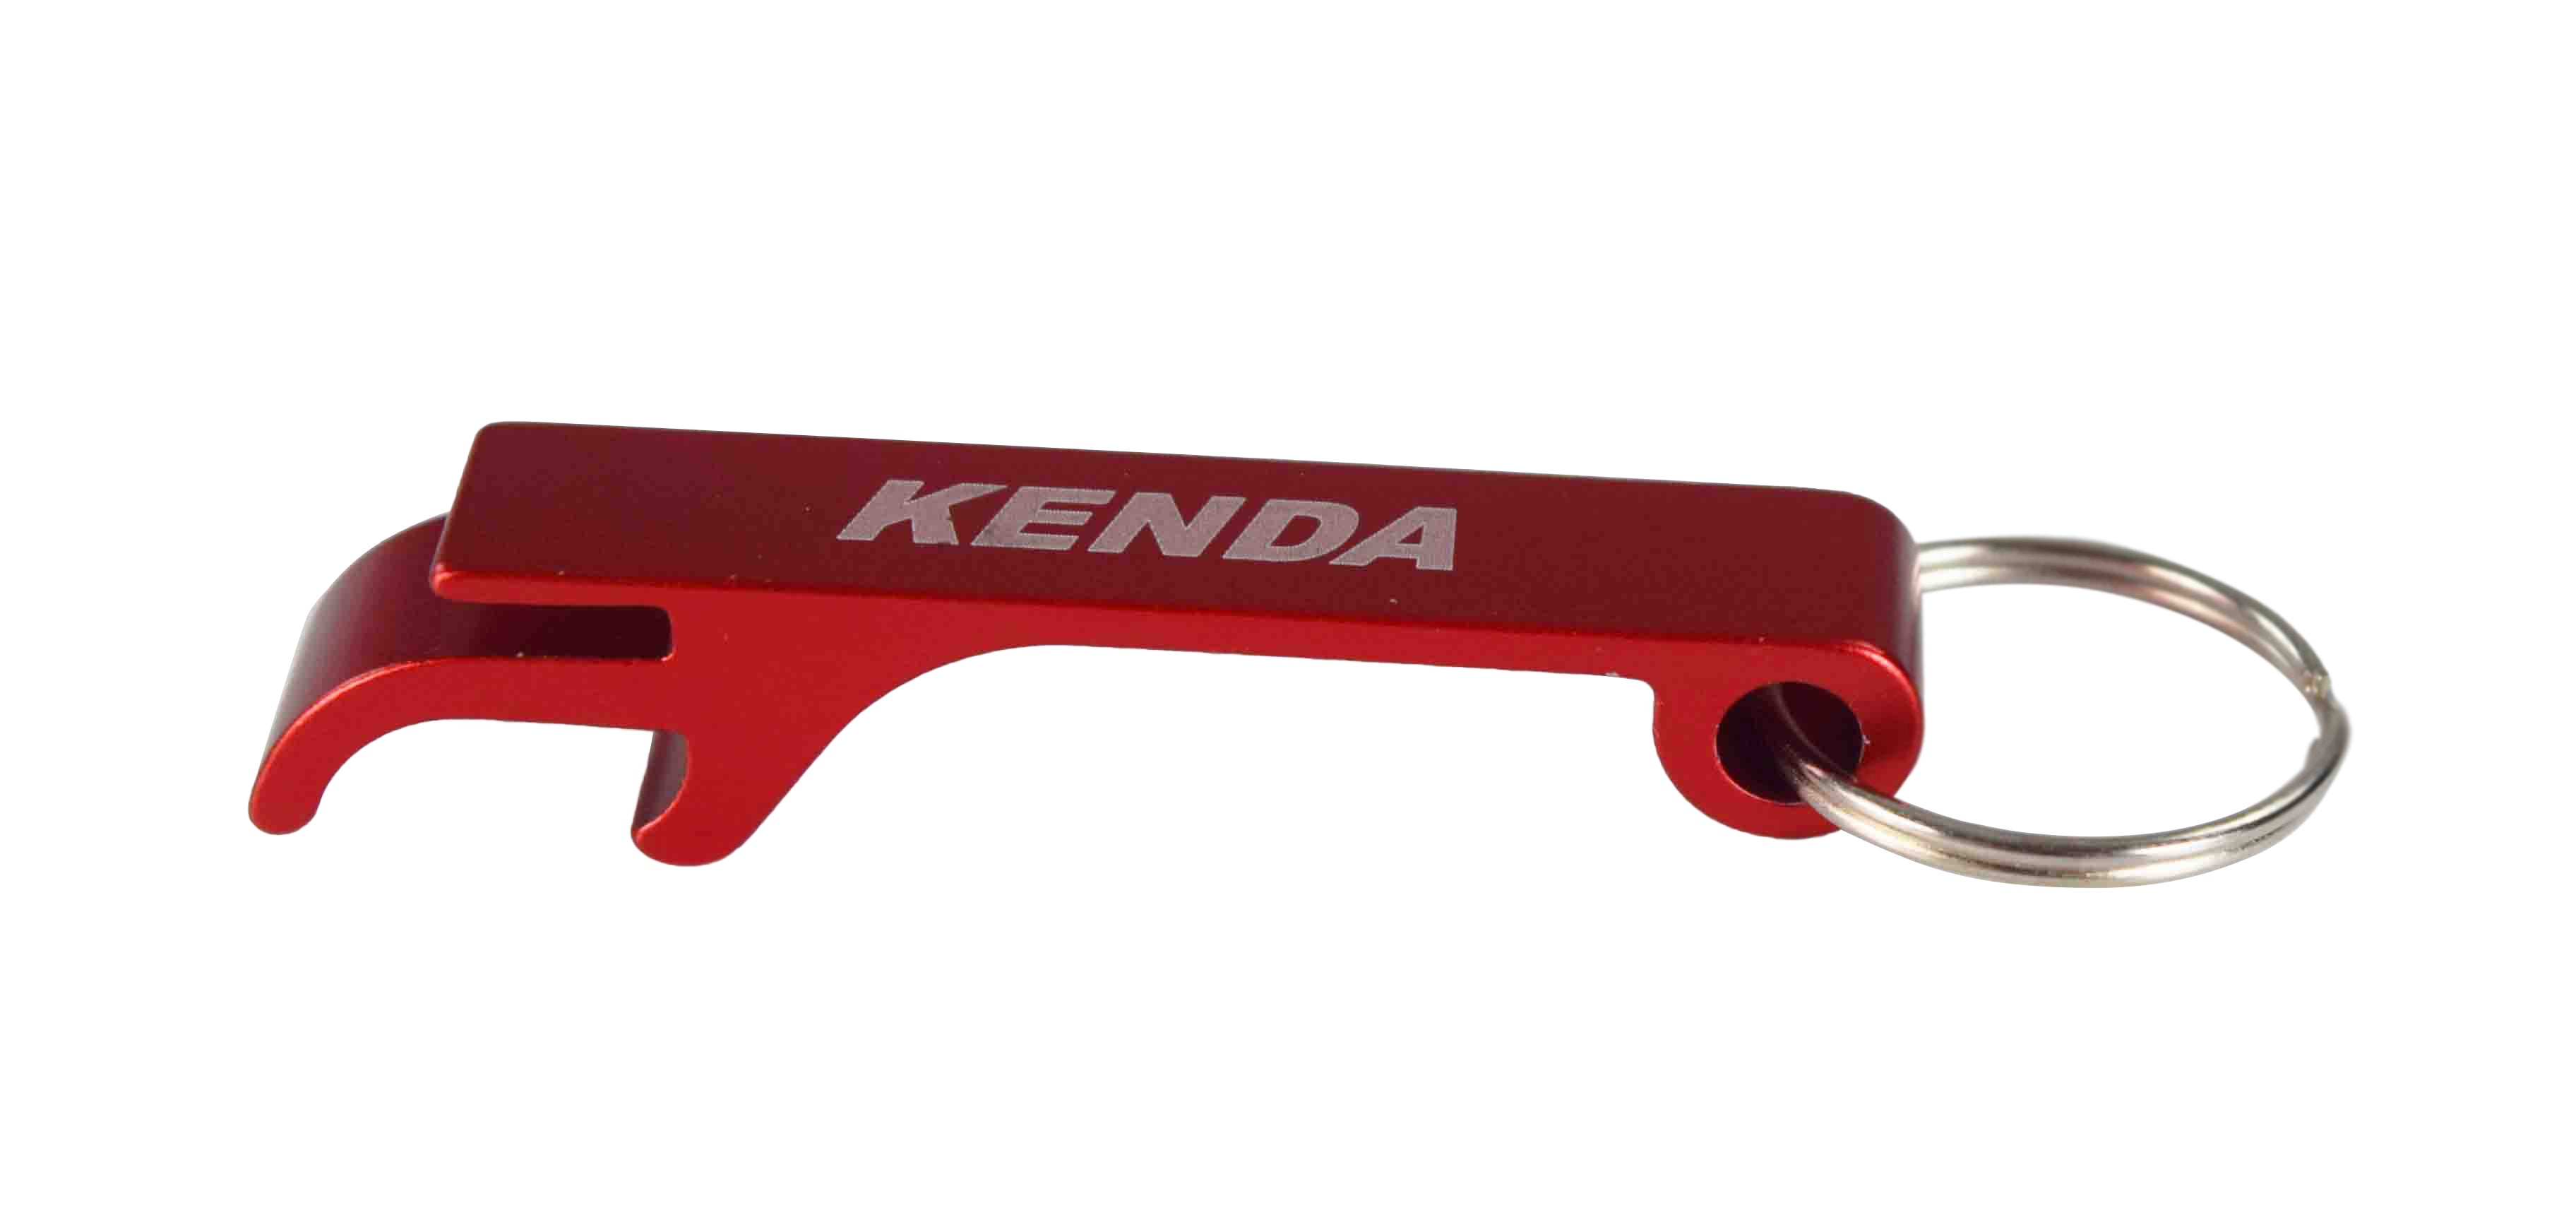 Kenda 277010N4 205/50-10 Pro Tour 4 Ply Tubeless Golf Cart Tire